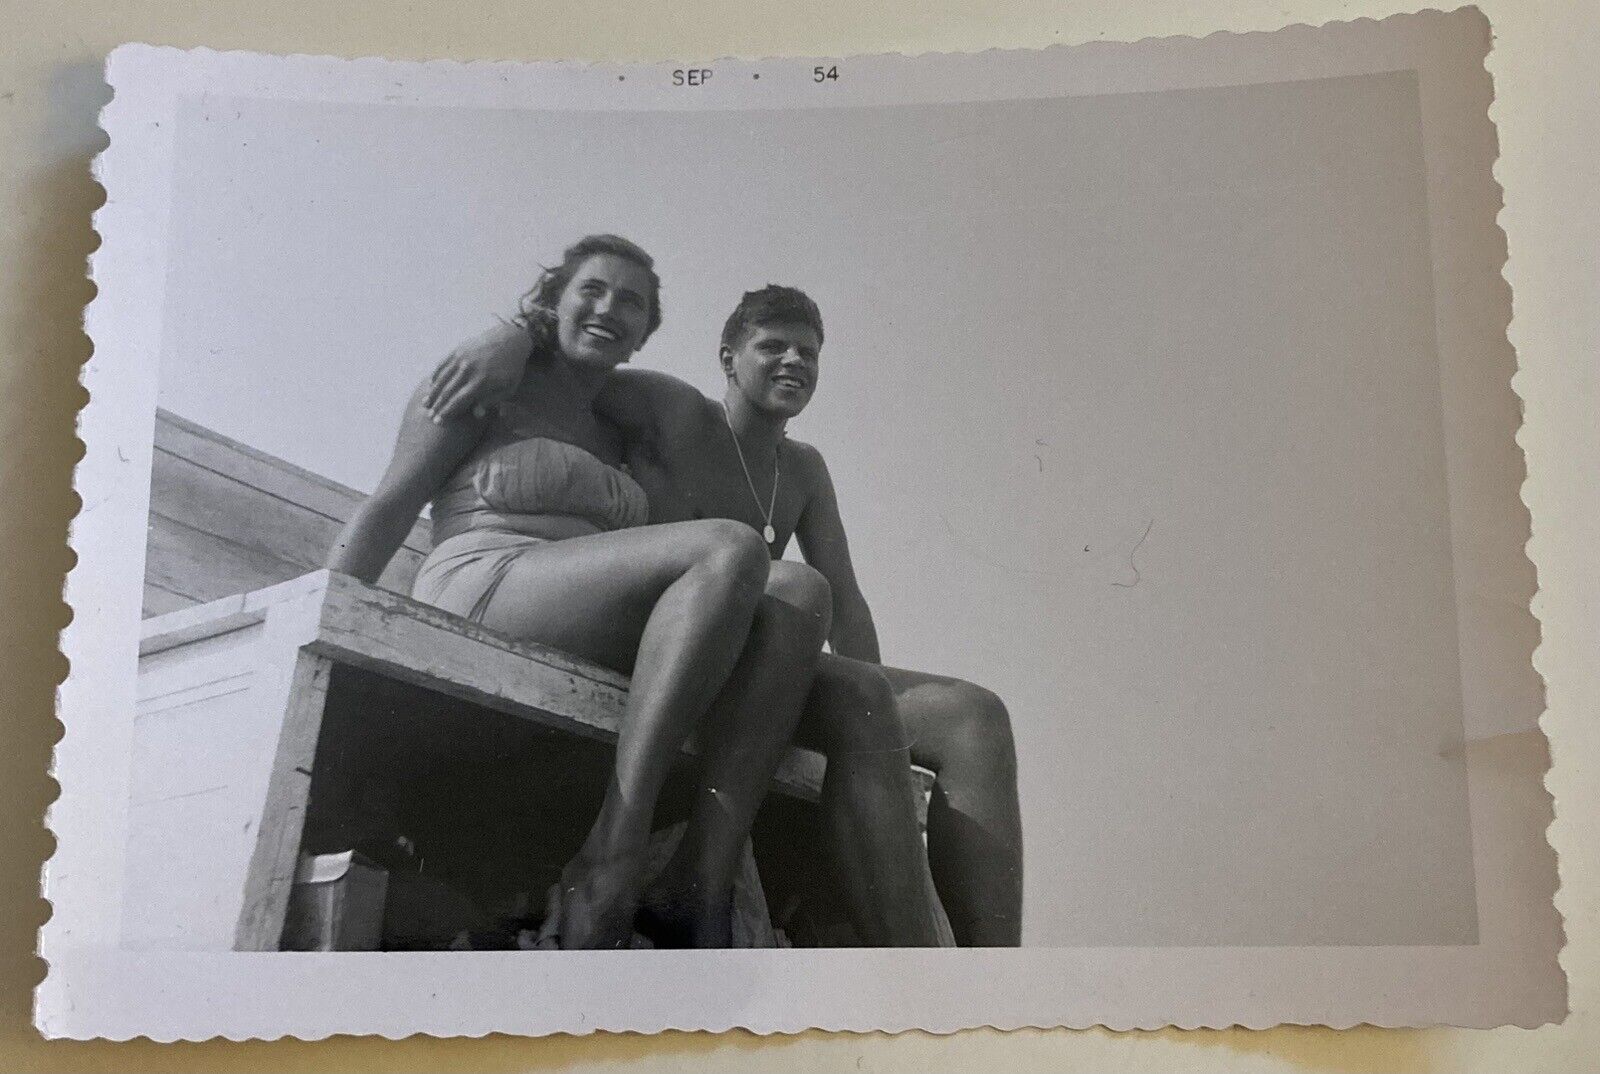 1954 Lifeguard & Bikini Girlfriend Jersey Shore FOUND PHOTOGRAPH Original B&W